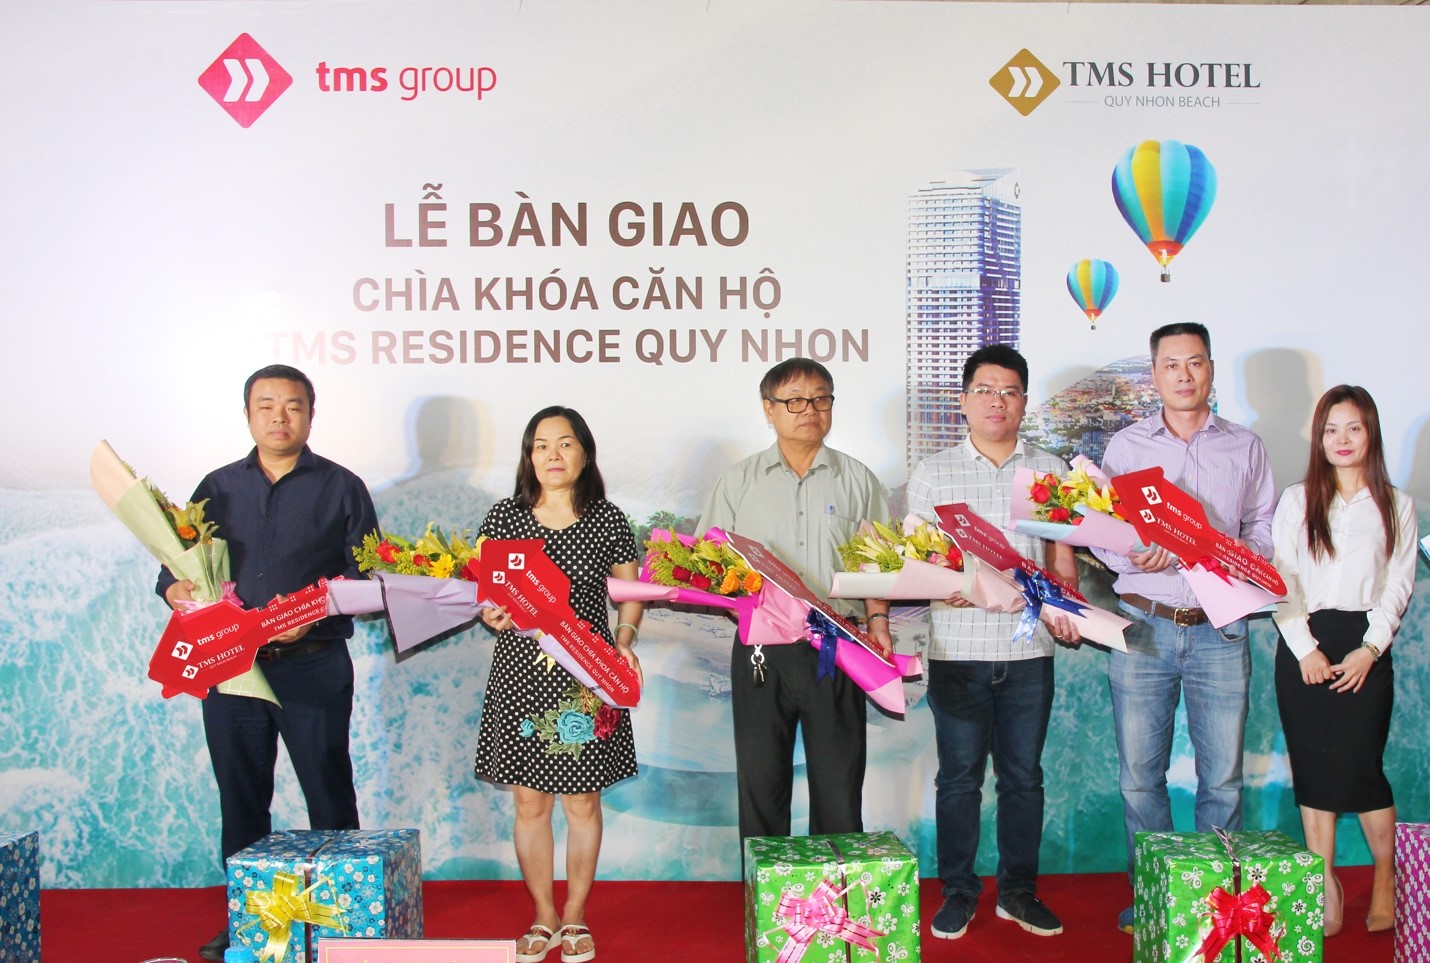 TMS Hotel Quy Nhon Beach的第一批房屋正式交房